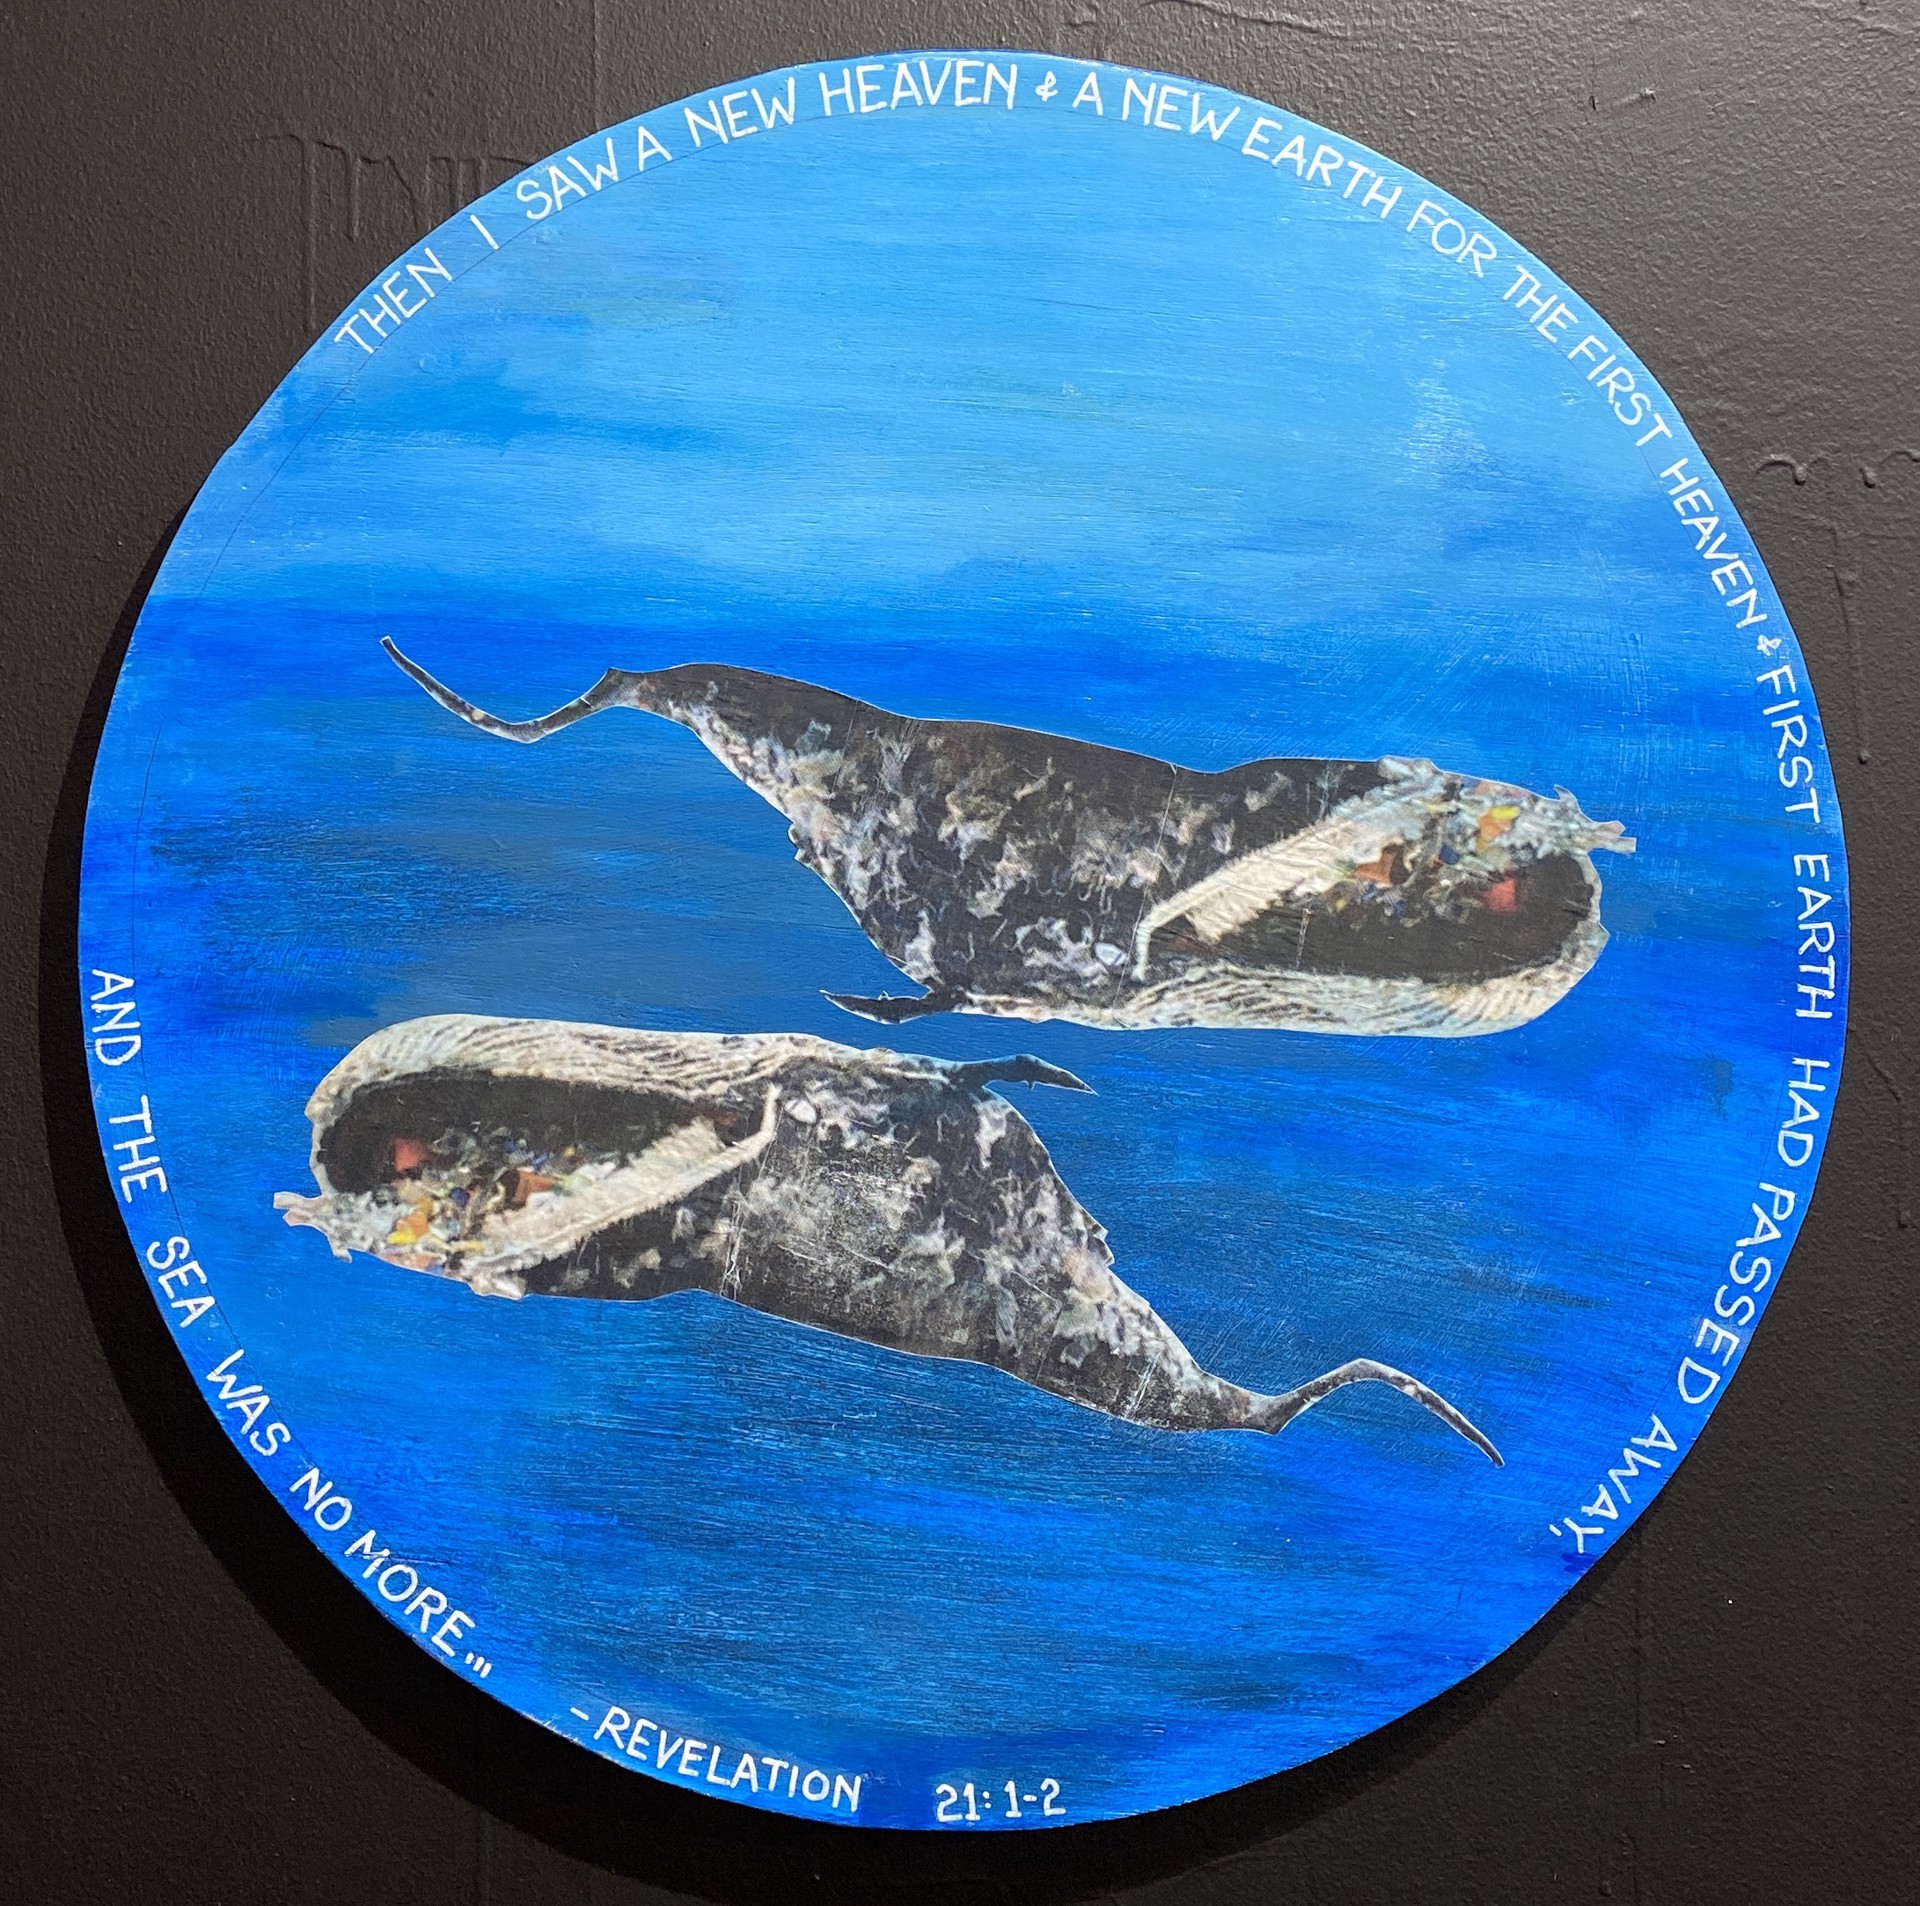 Whales (Revelation) by Al Diaz